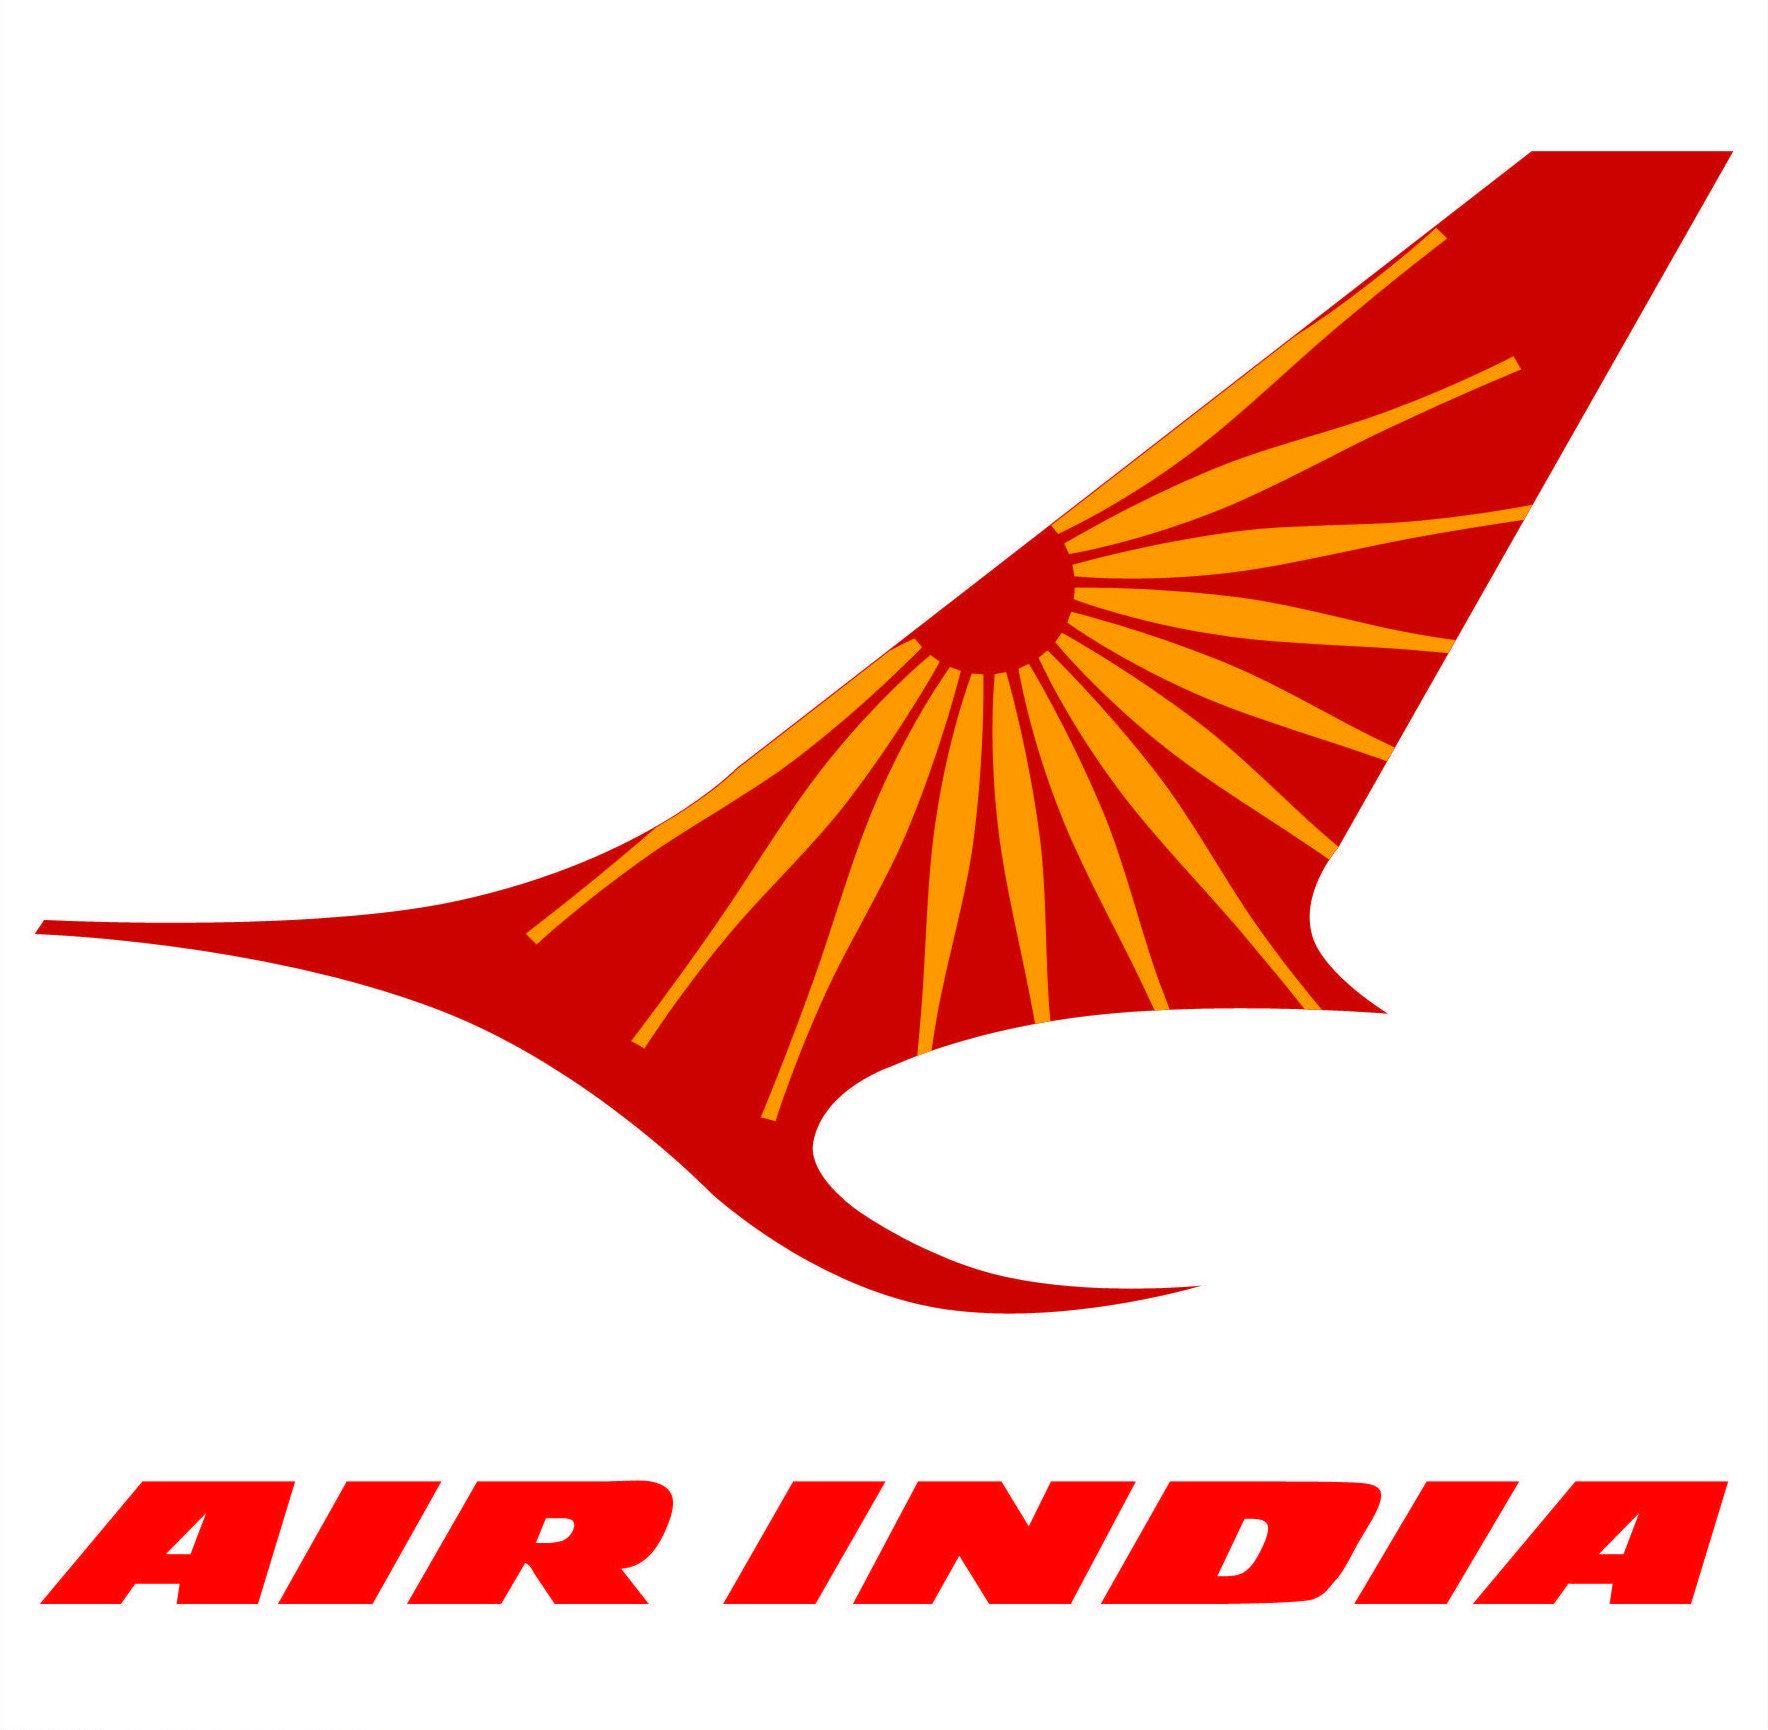 Indian Airways Logo - Air India logo. ✈ AIR LINES ✈. Air india, India, Airline